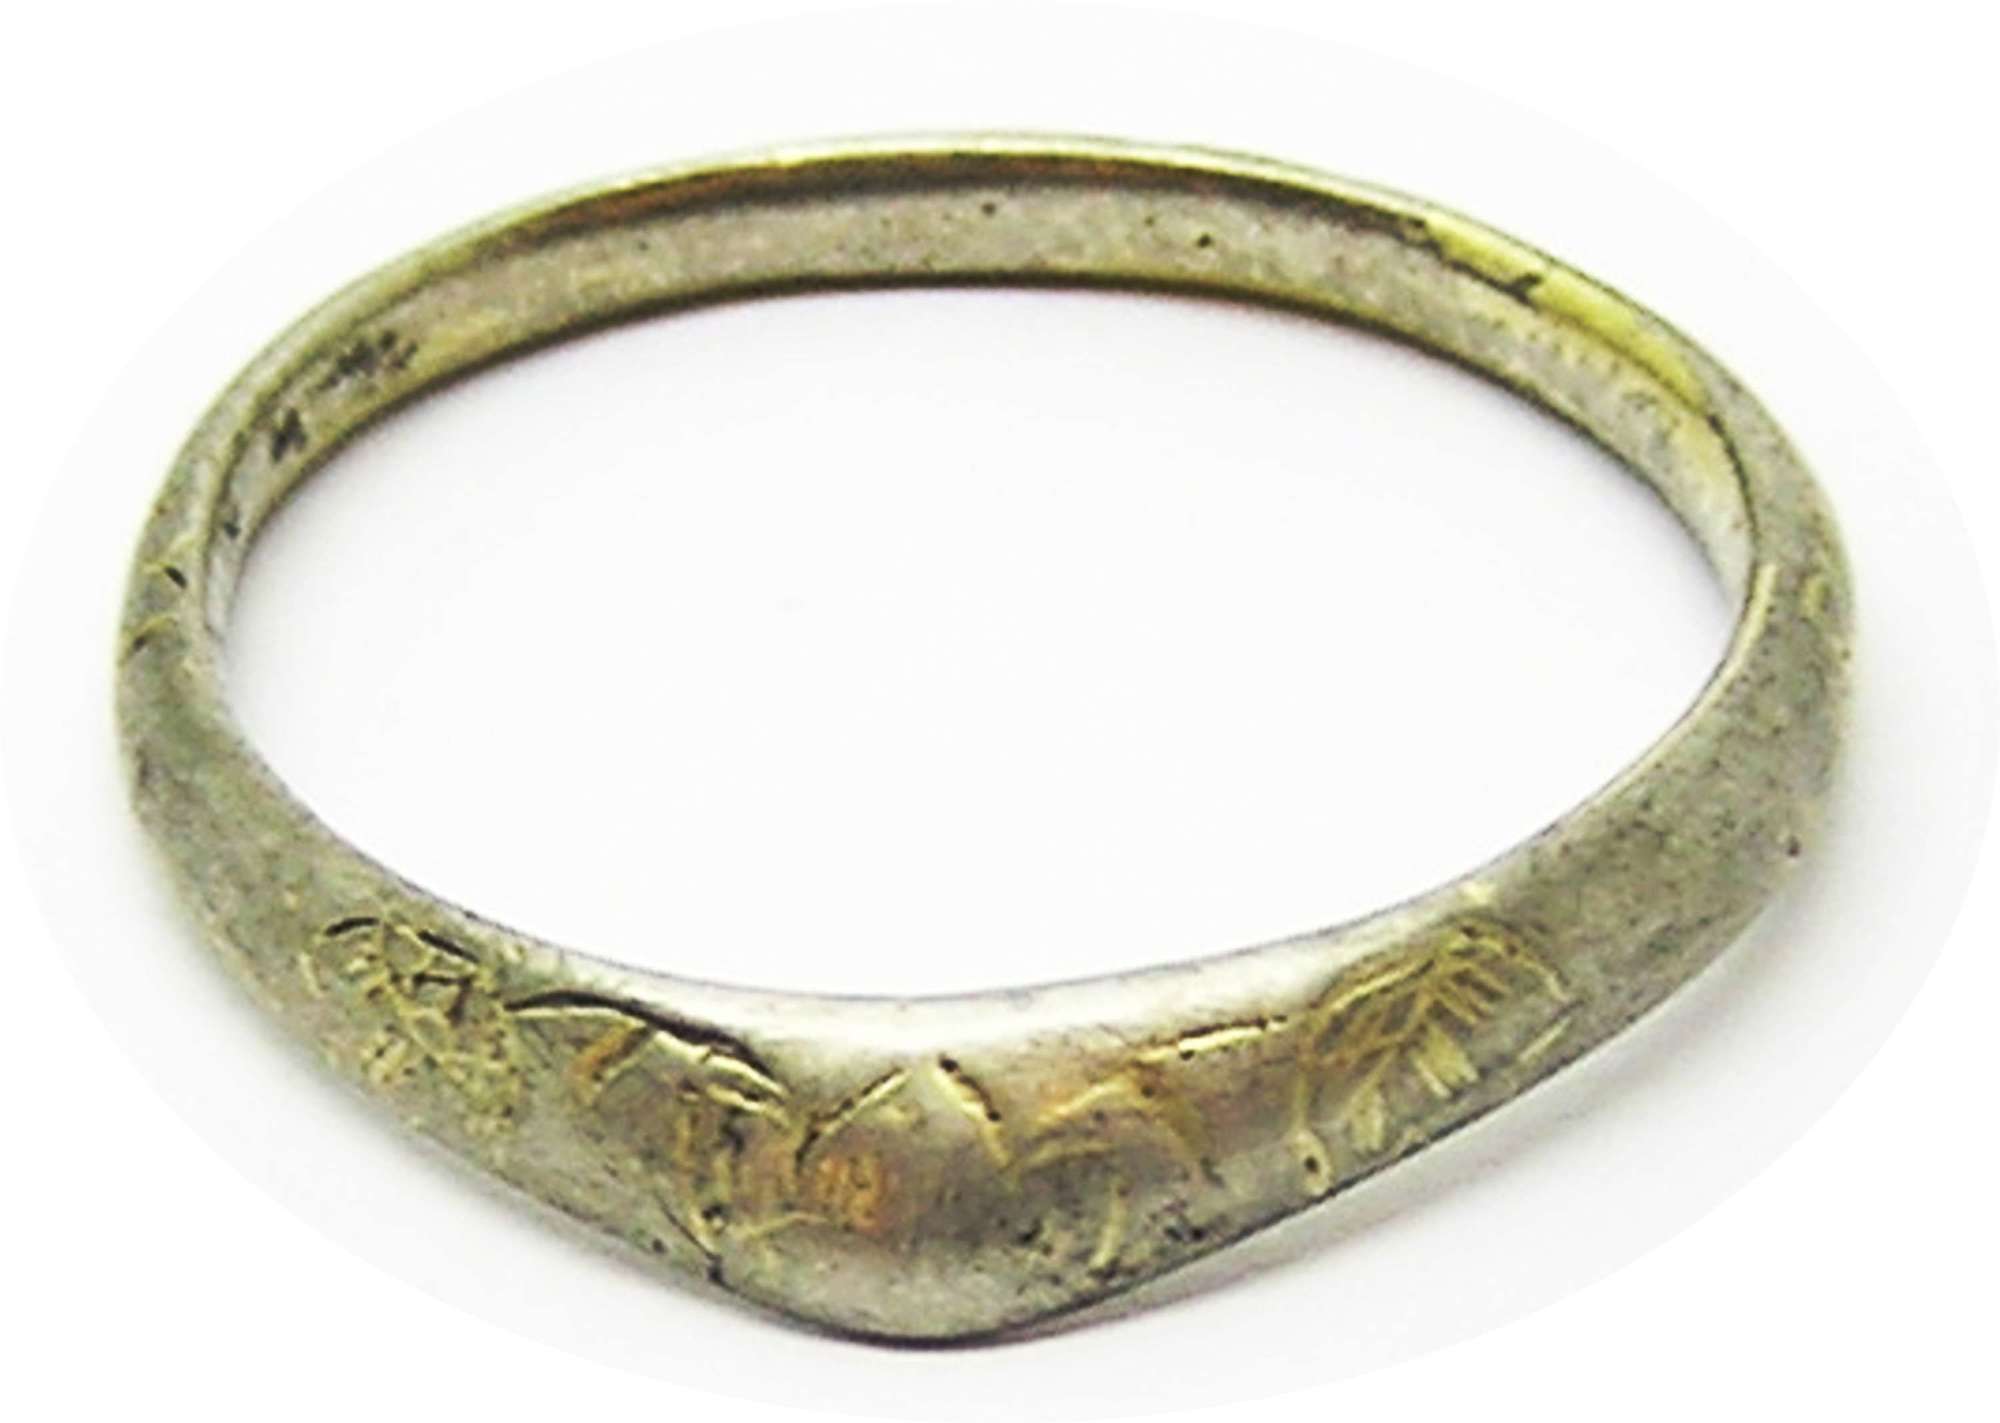 Medieval silver-gilt Troubadour ring lute gittern or harp